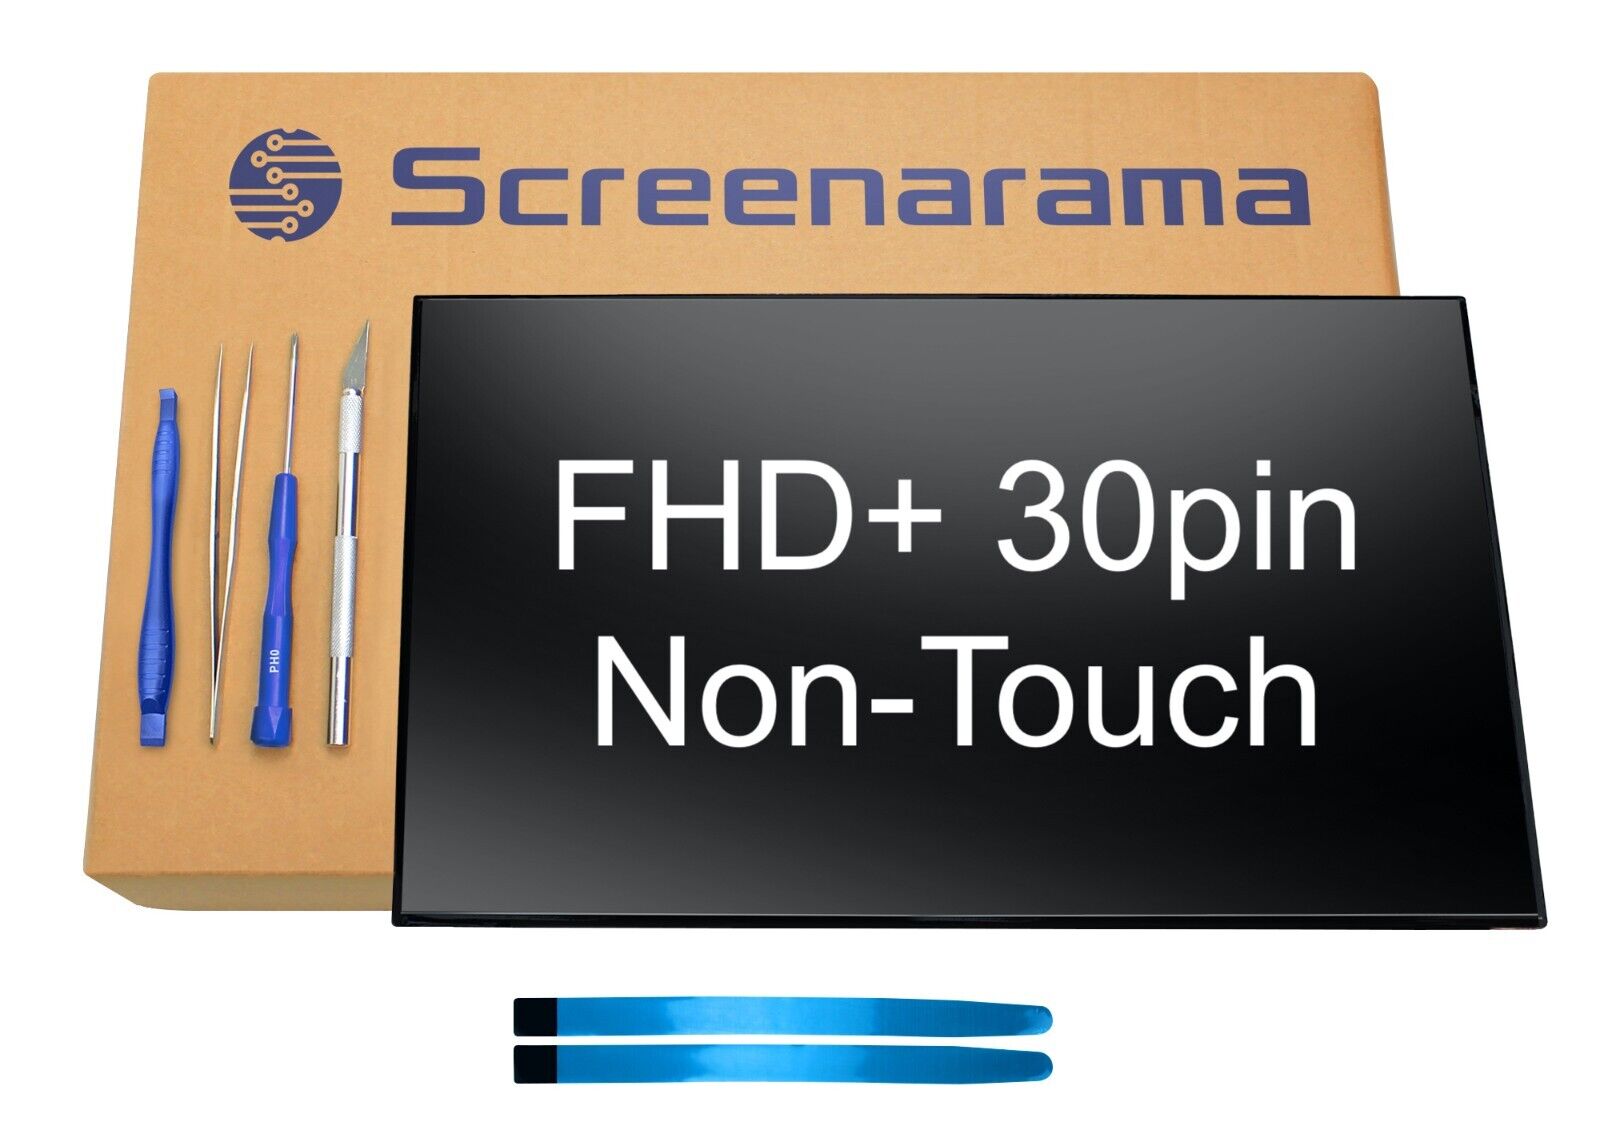 BOE NE140WUM-N62 V8.0 FHD+ 30pin LED LCD Screen + Tools SCREENARAMA * FAST